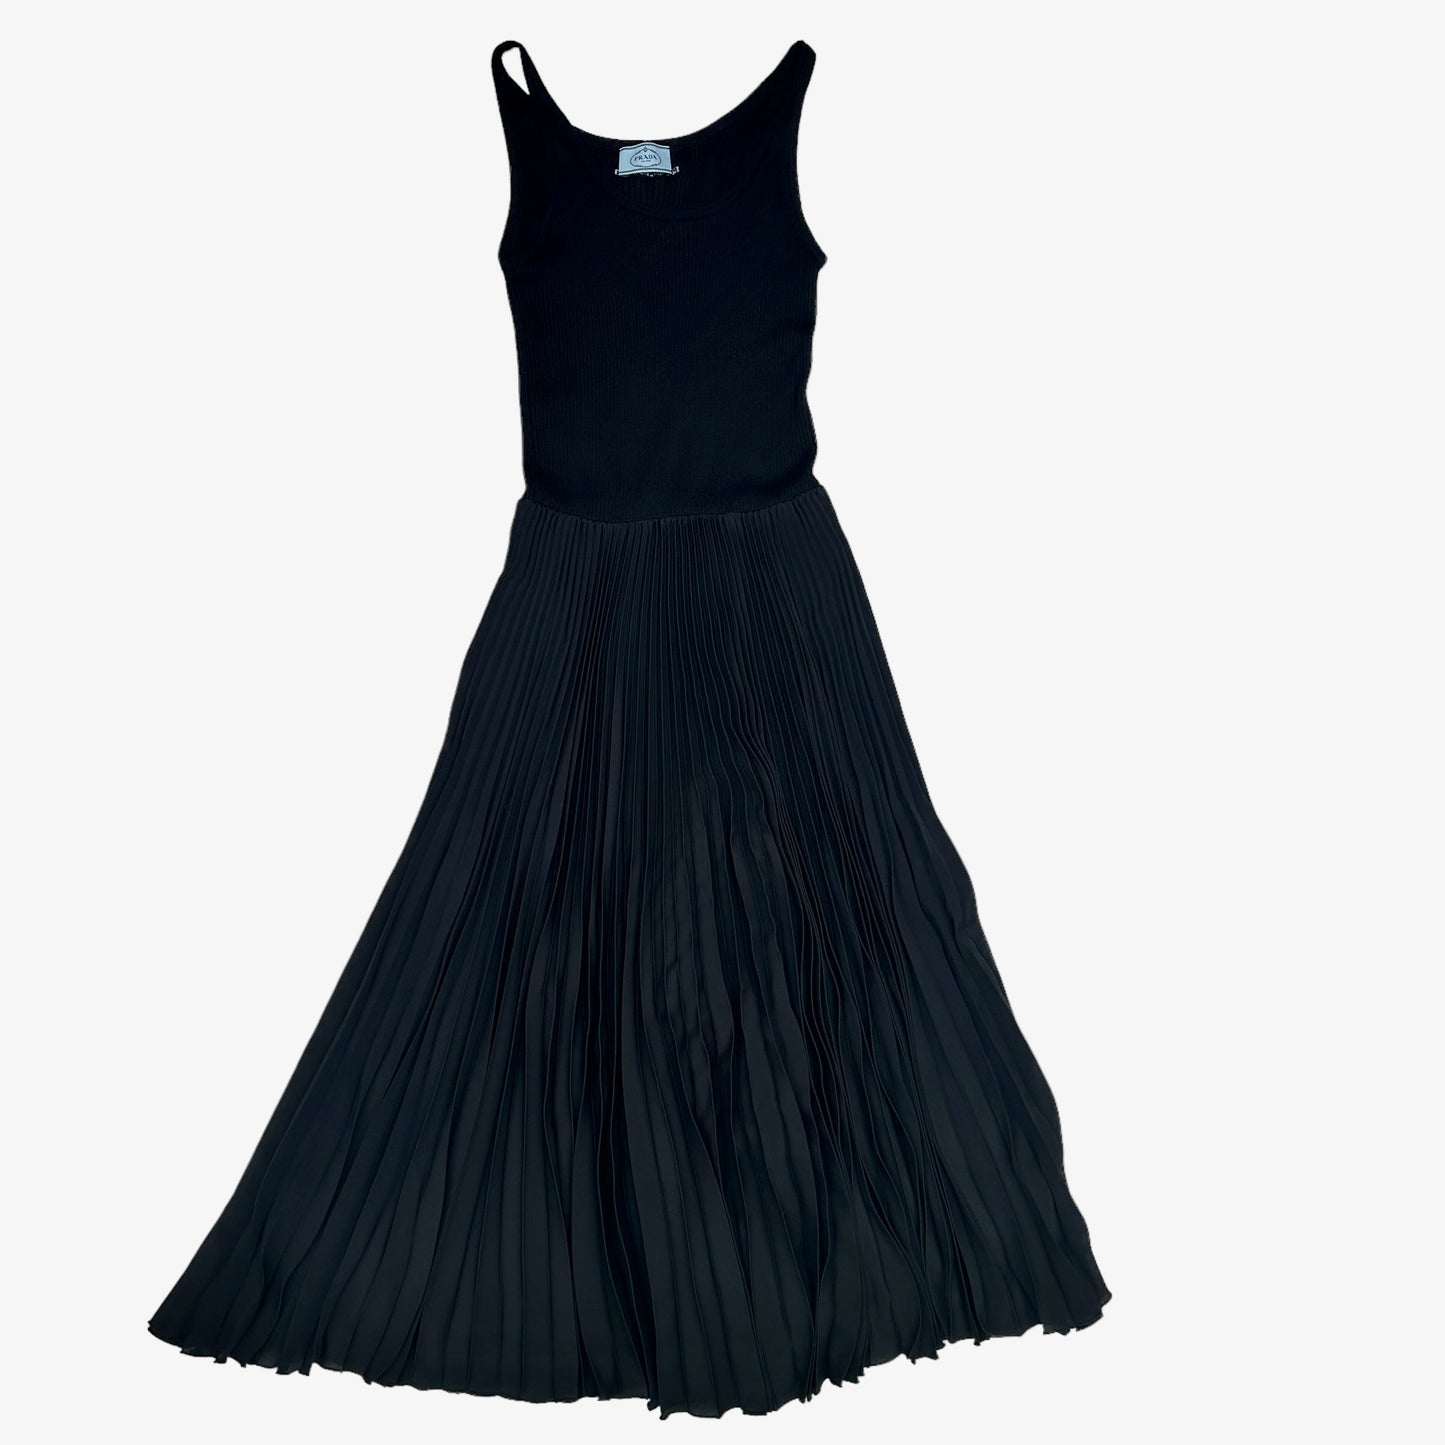 Black Pleated Dress - M